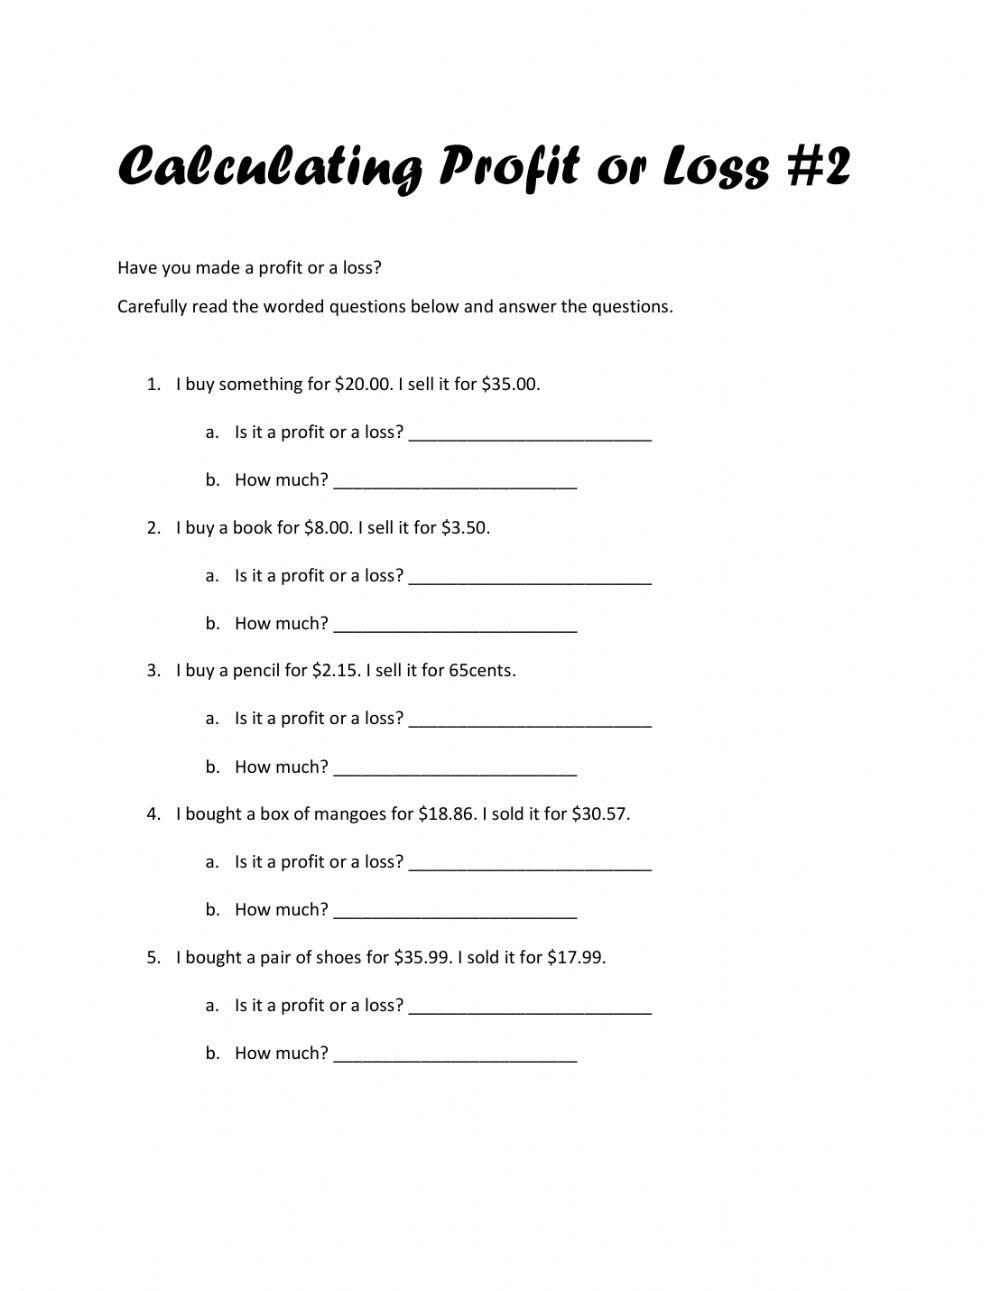 Calculating Profit and Loss -2